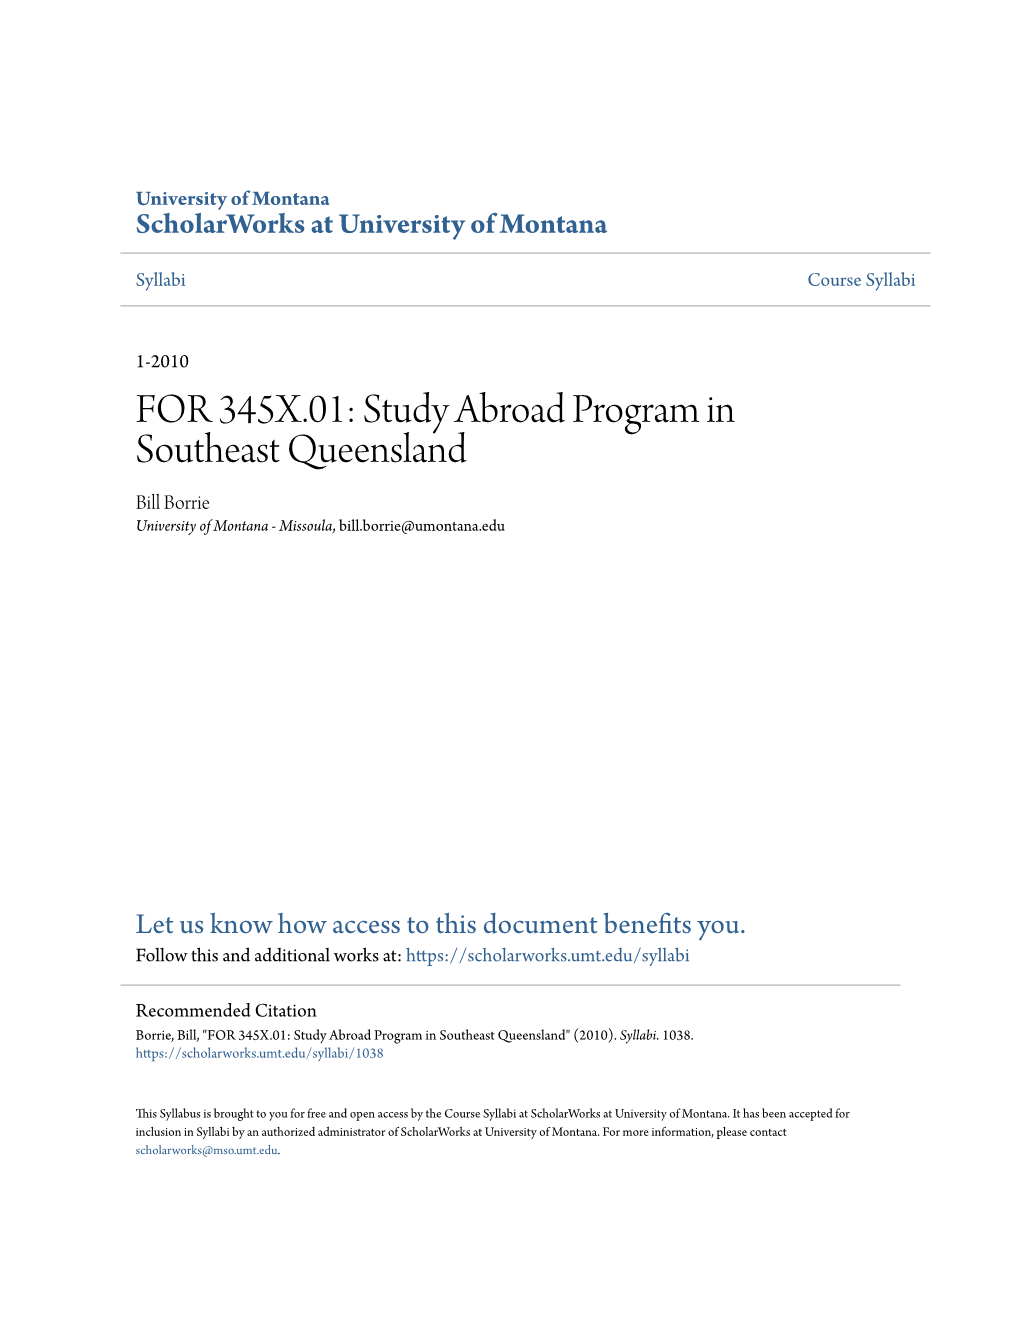 Study Abroad Program in Southeast Queensland Bill Borrie University of Montana - Missoula, Bill.Borrie@Umontana.Edu